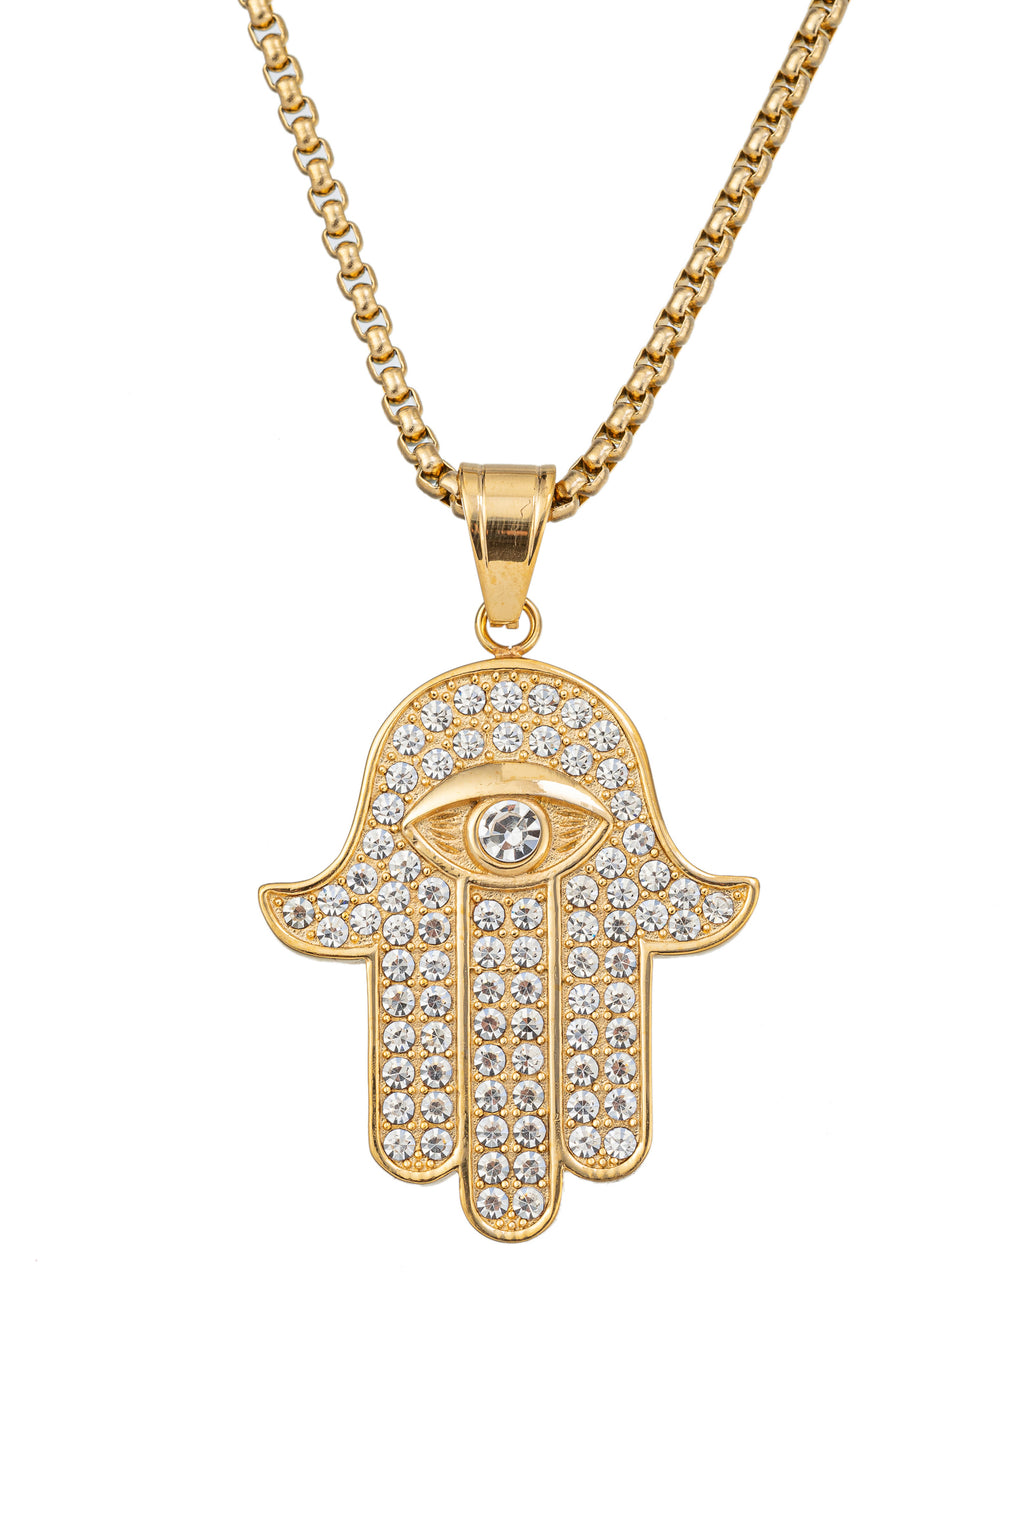 Gold tone titanium hamsa pendant necklace studded with CZ crystals.